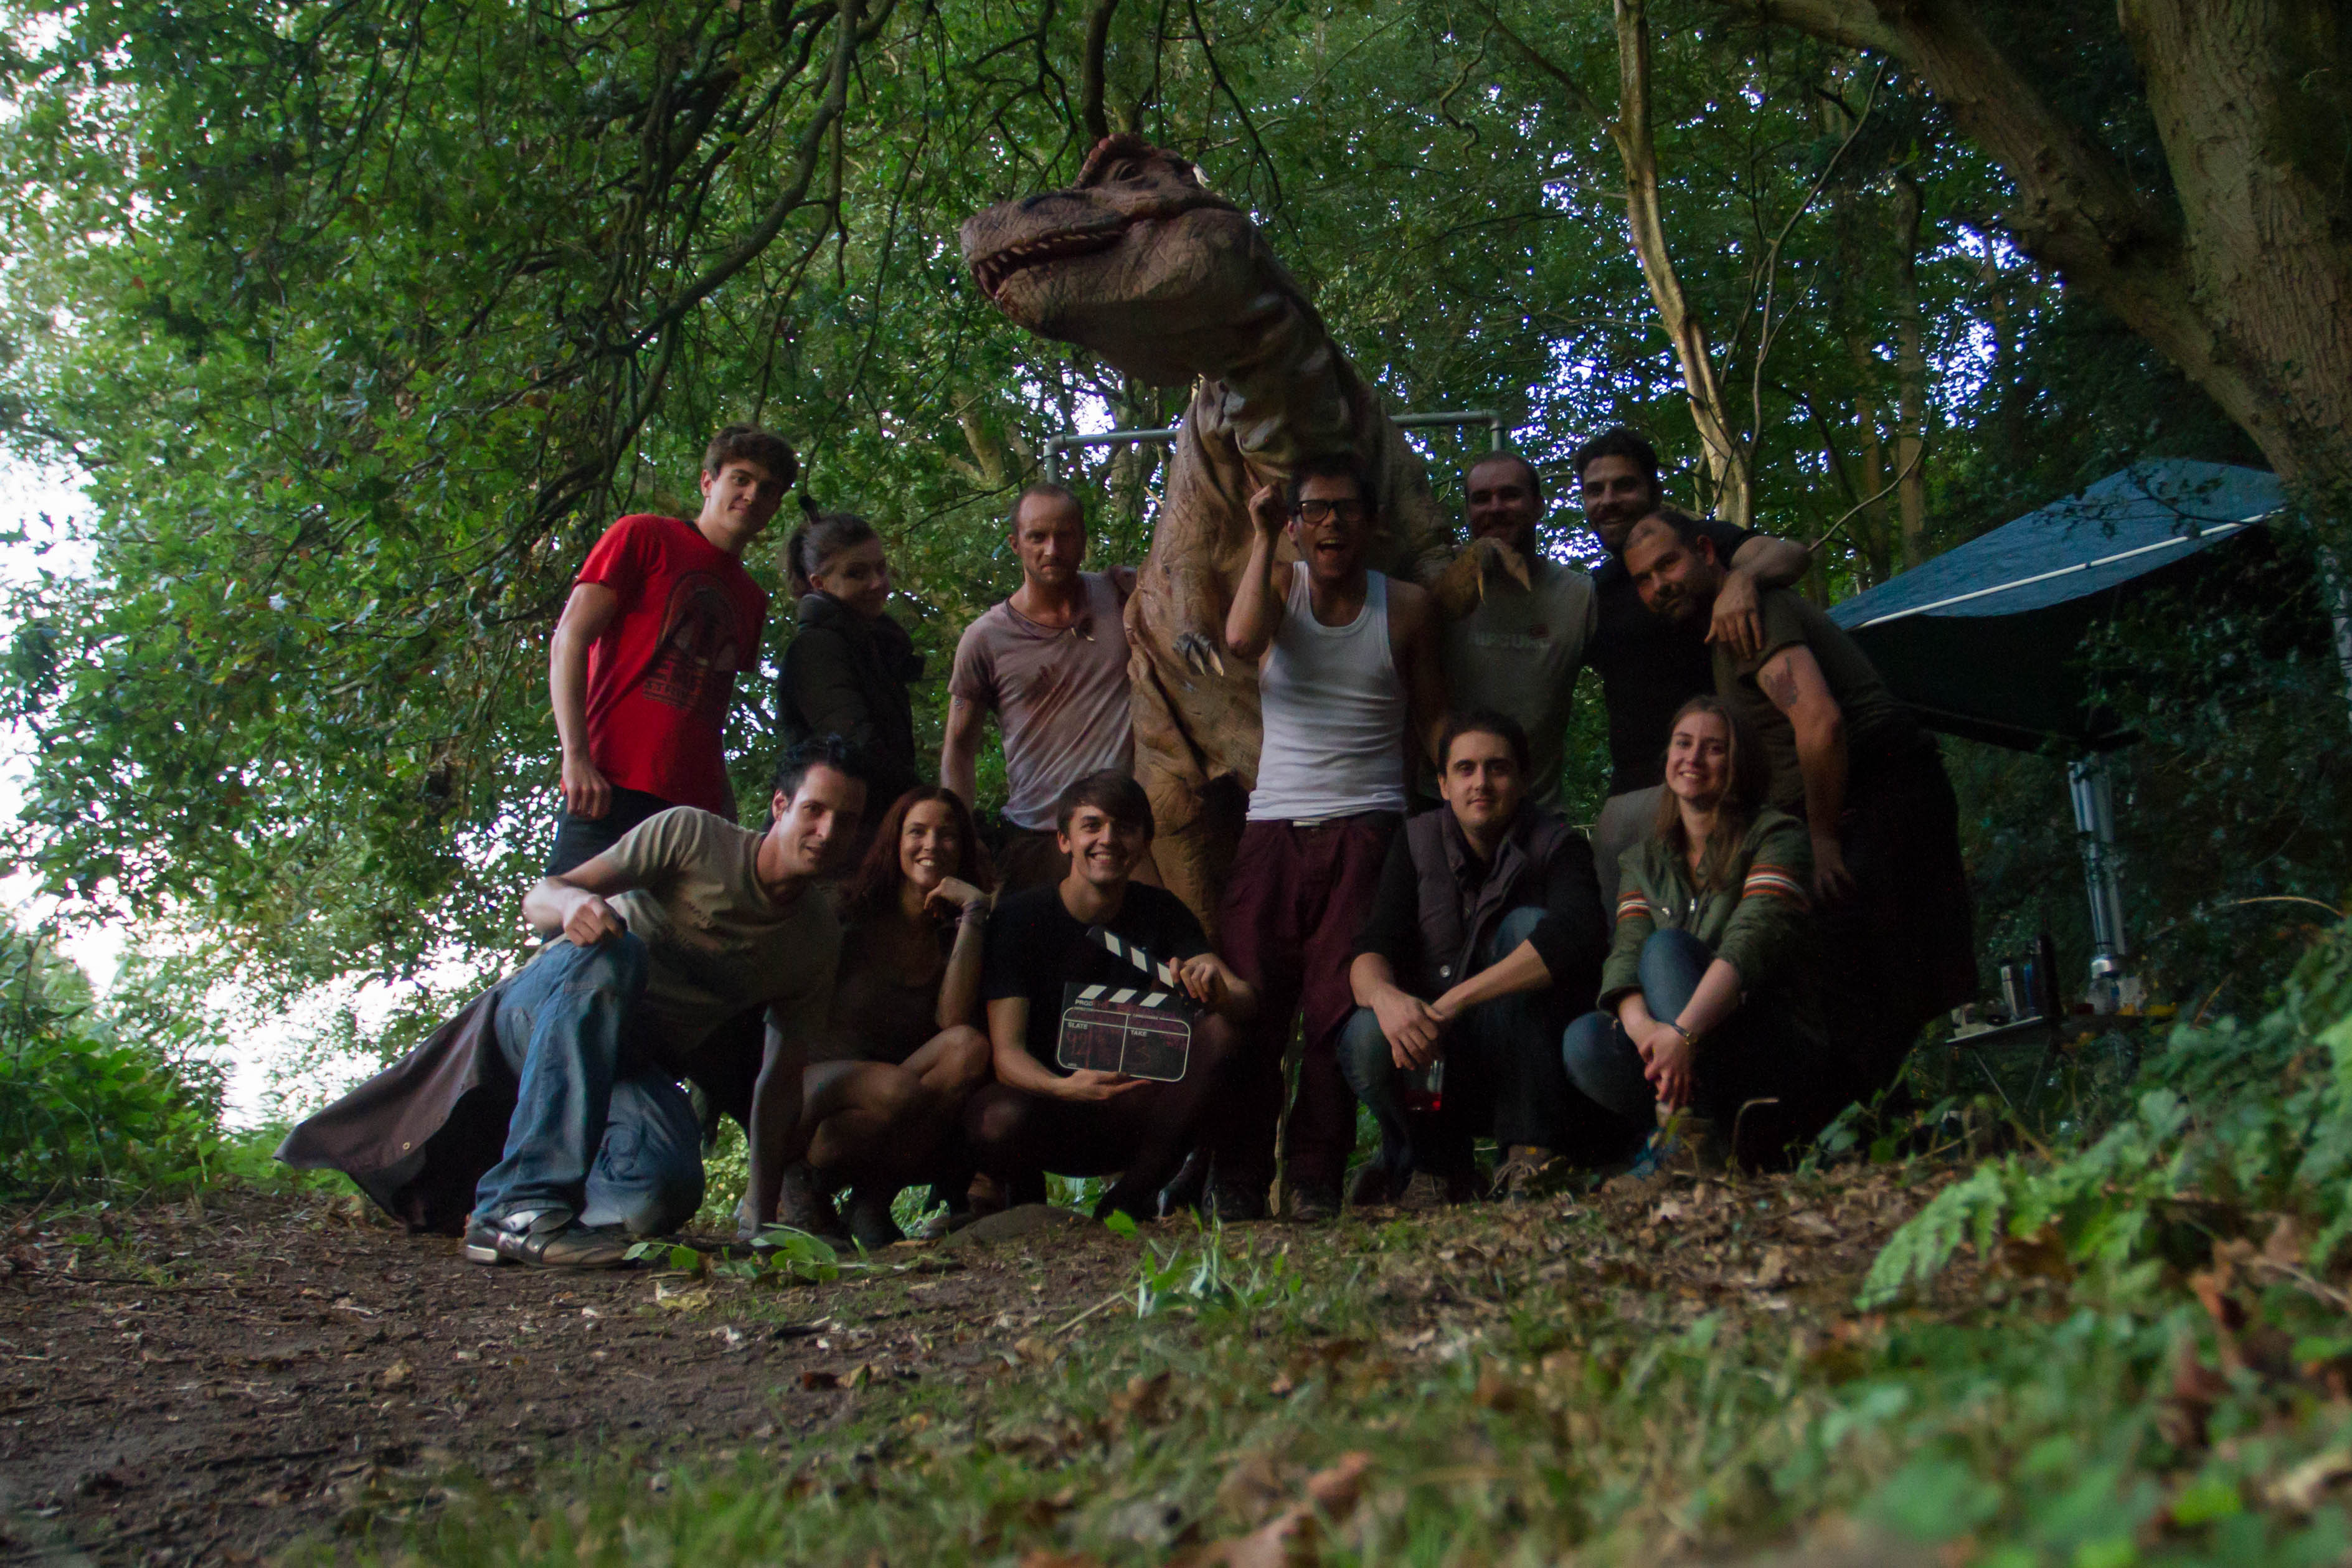 On Set - Extinction Cast and Crew